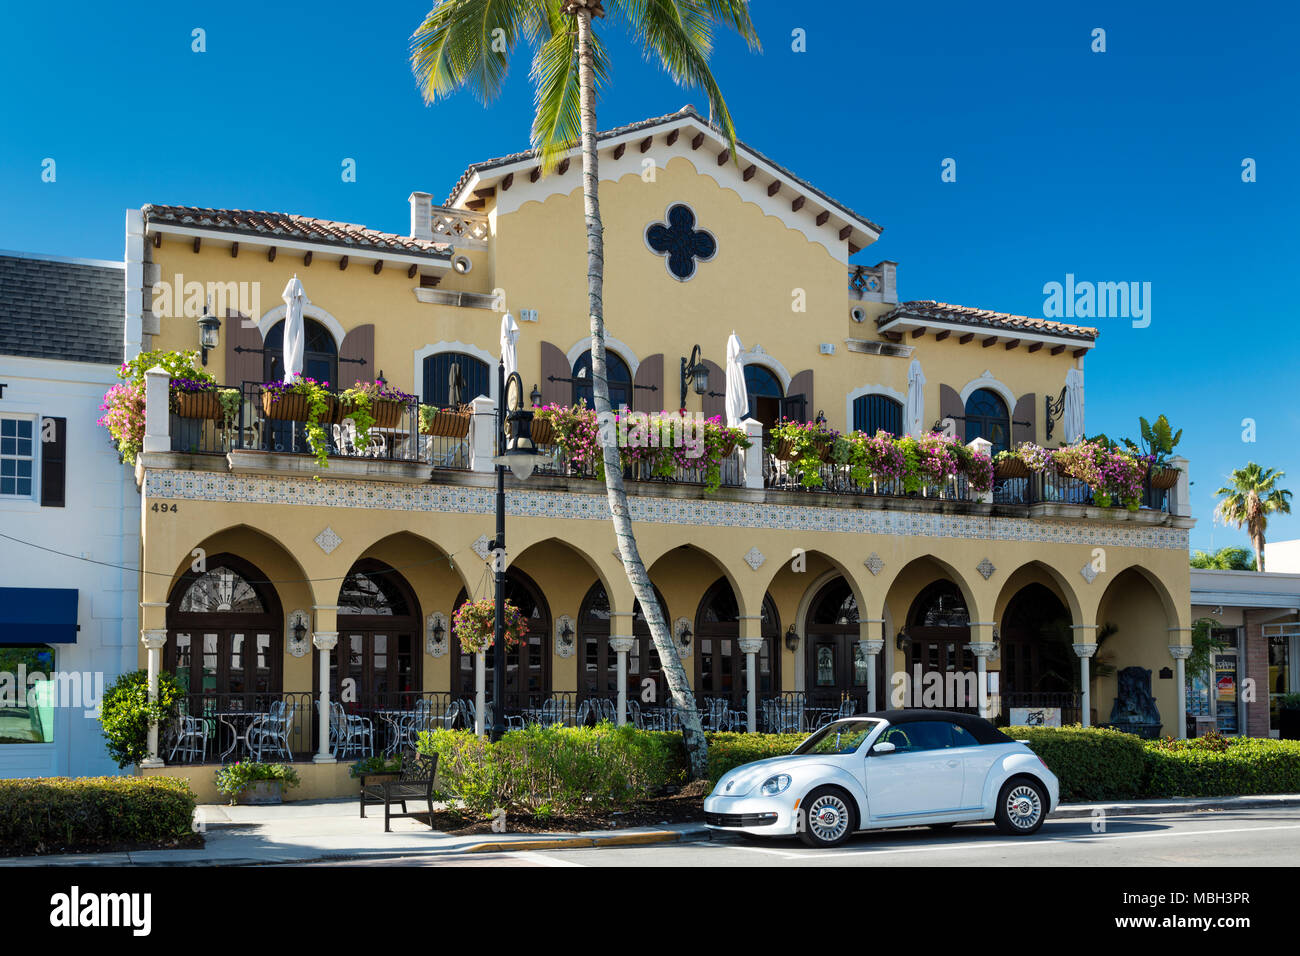 Cafe Lurcat - fine dining restaurant along 5th Avenue, Naples, Florida, USA Stock Photo